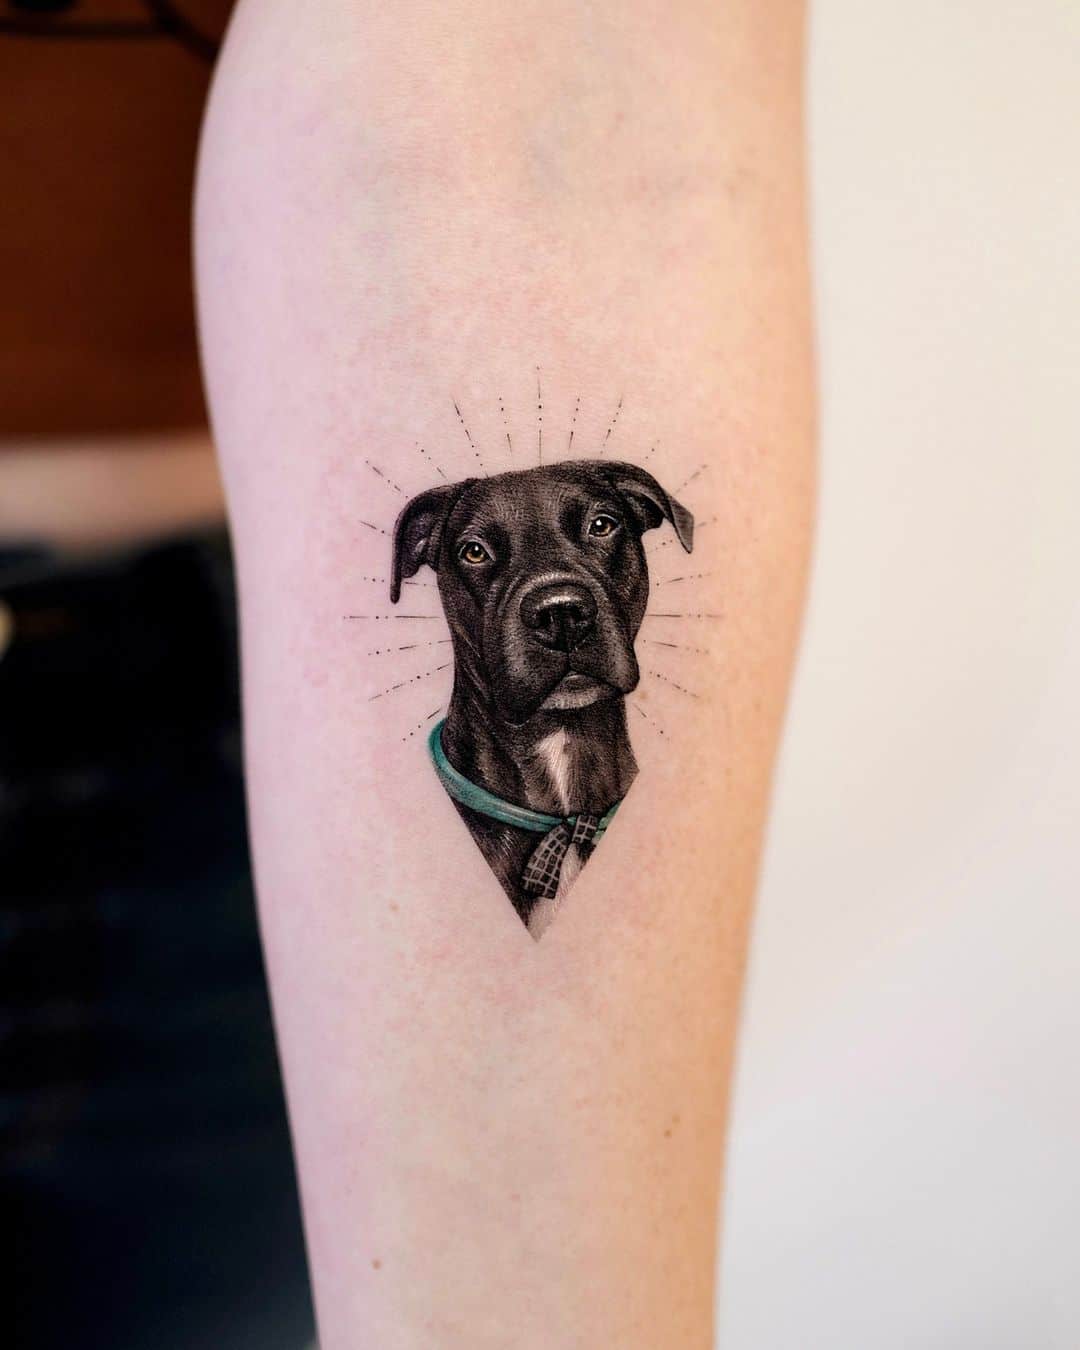 Realistic dog tattoo design by paw.tattoo